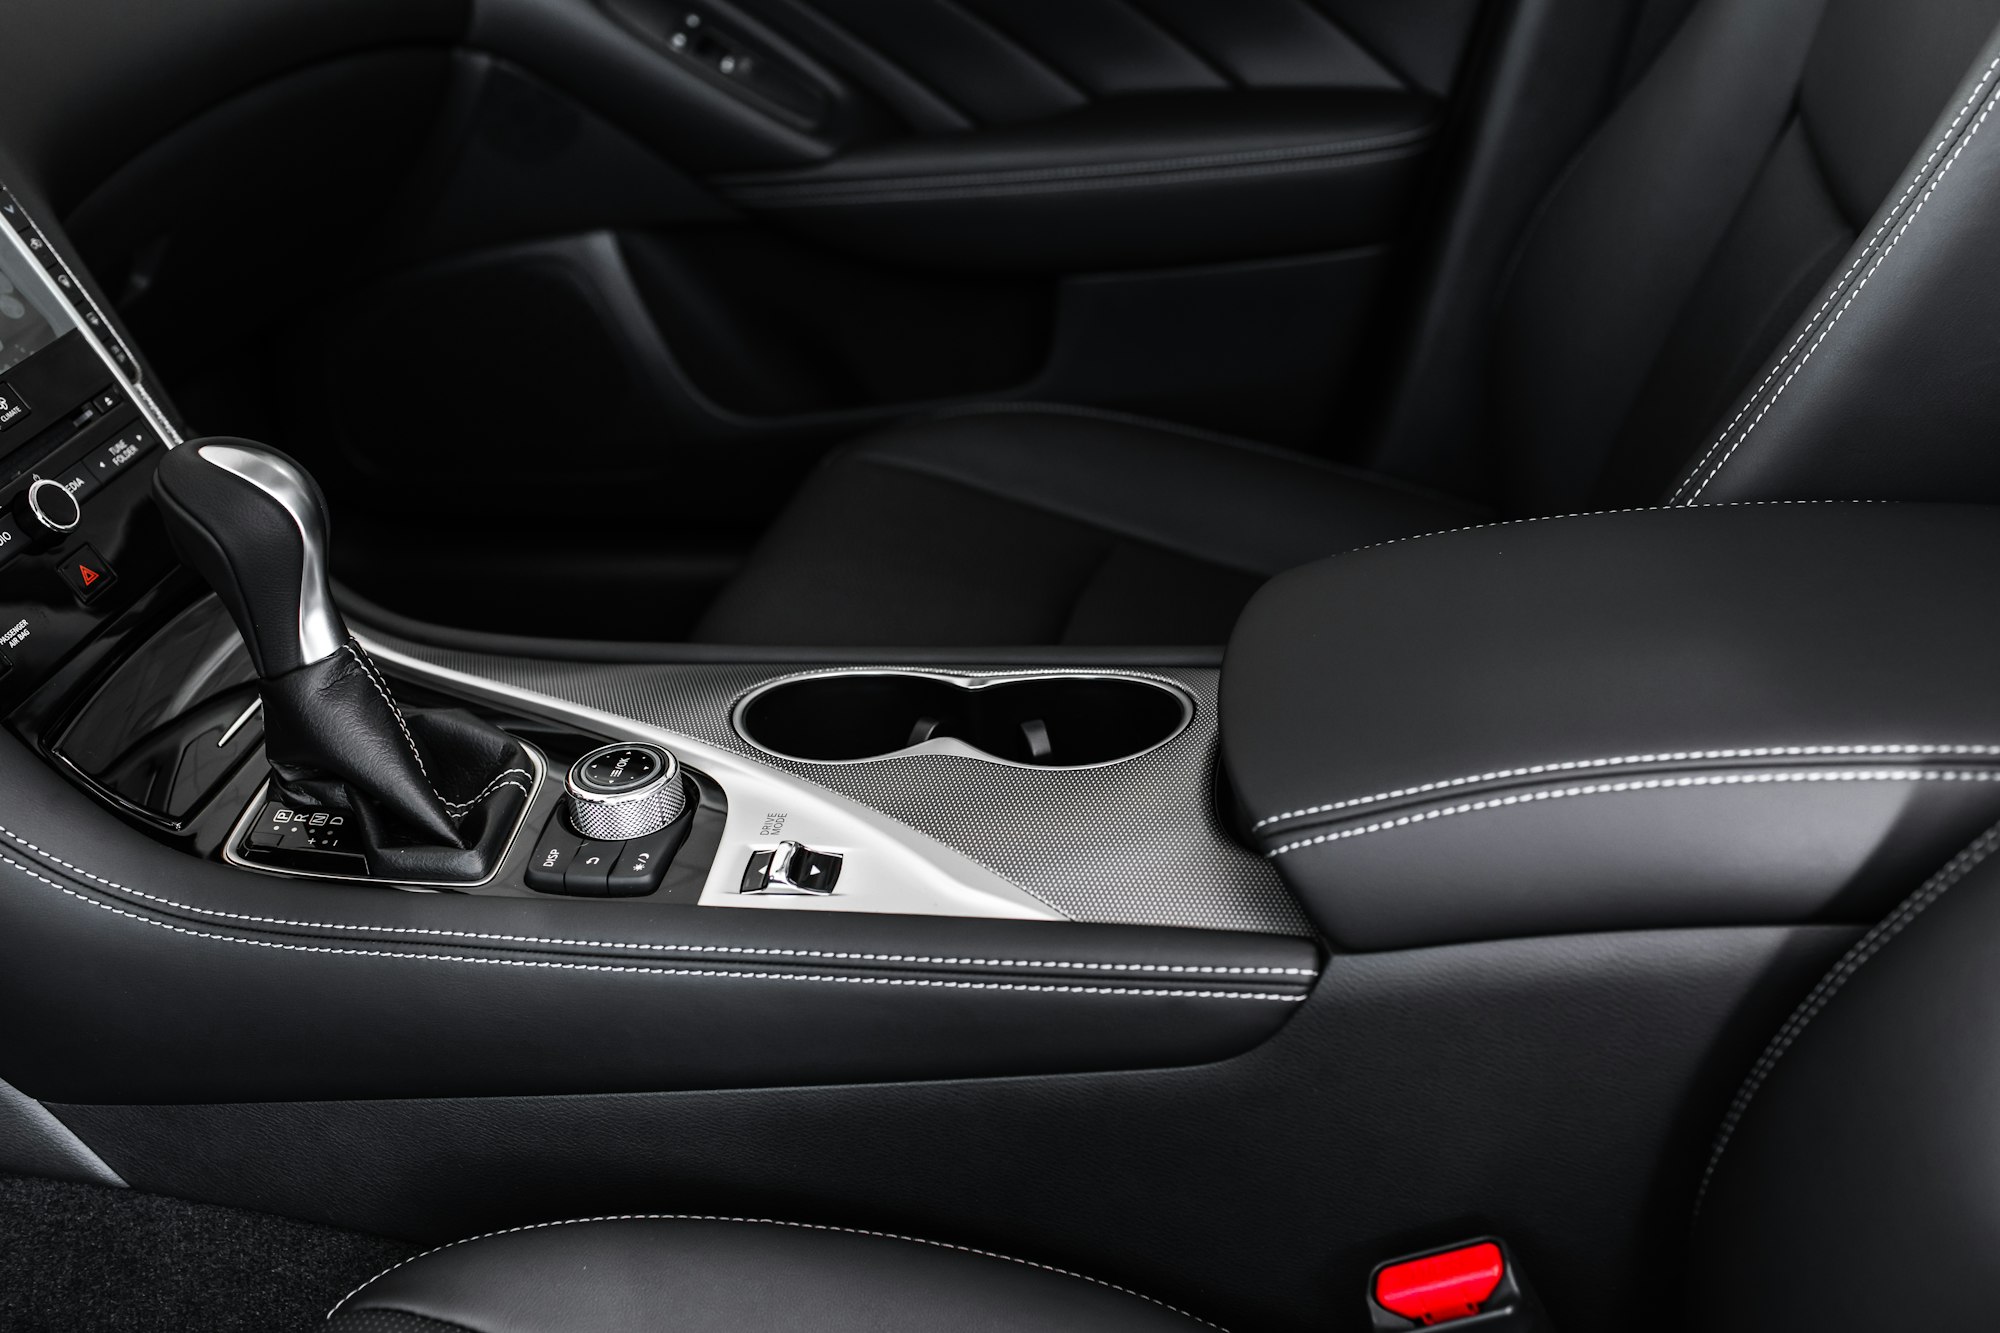 details of stylish car interior, leather interior